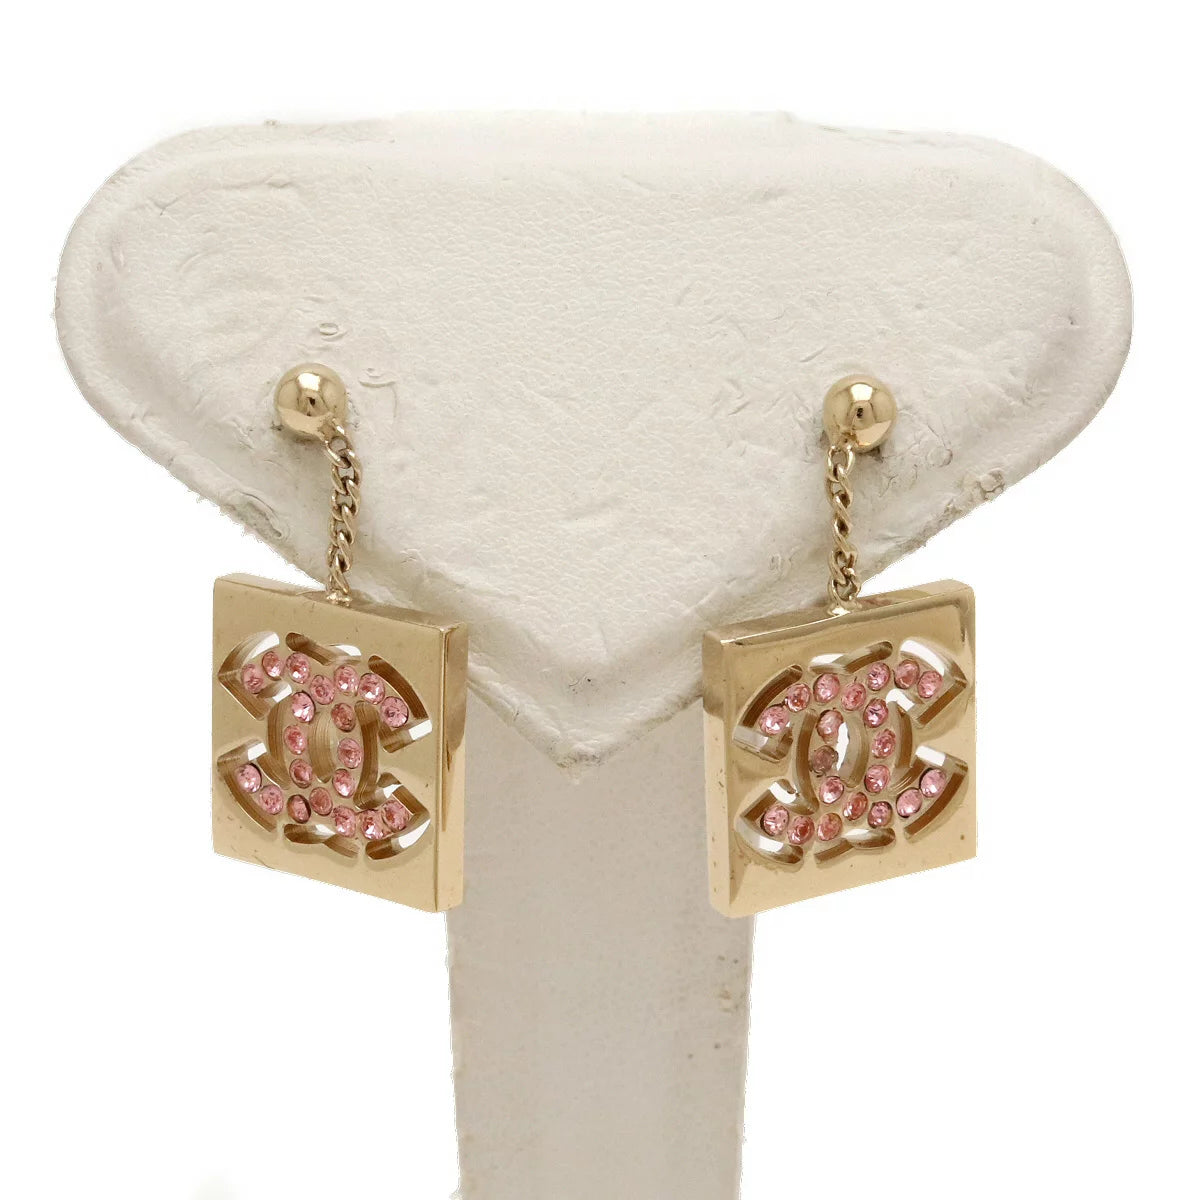 Chanel Pre-owned Gold-Plated Pearl Hoop Earrings